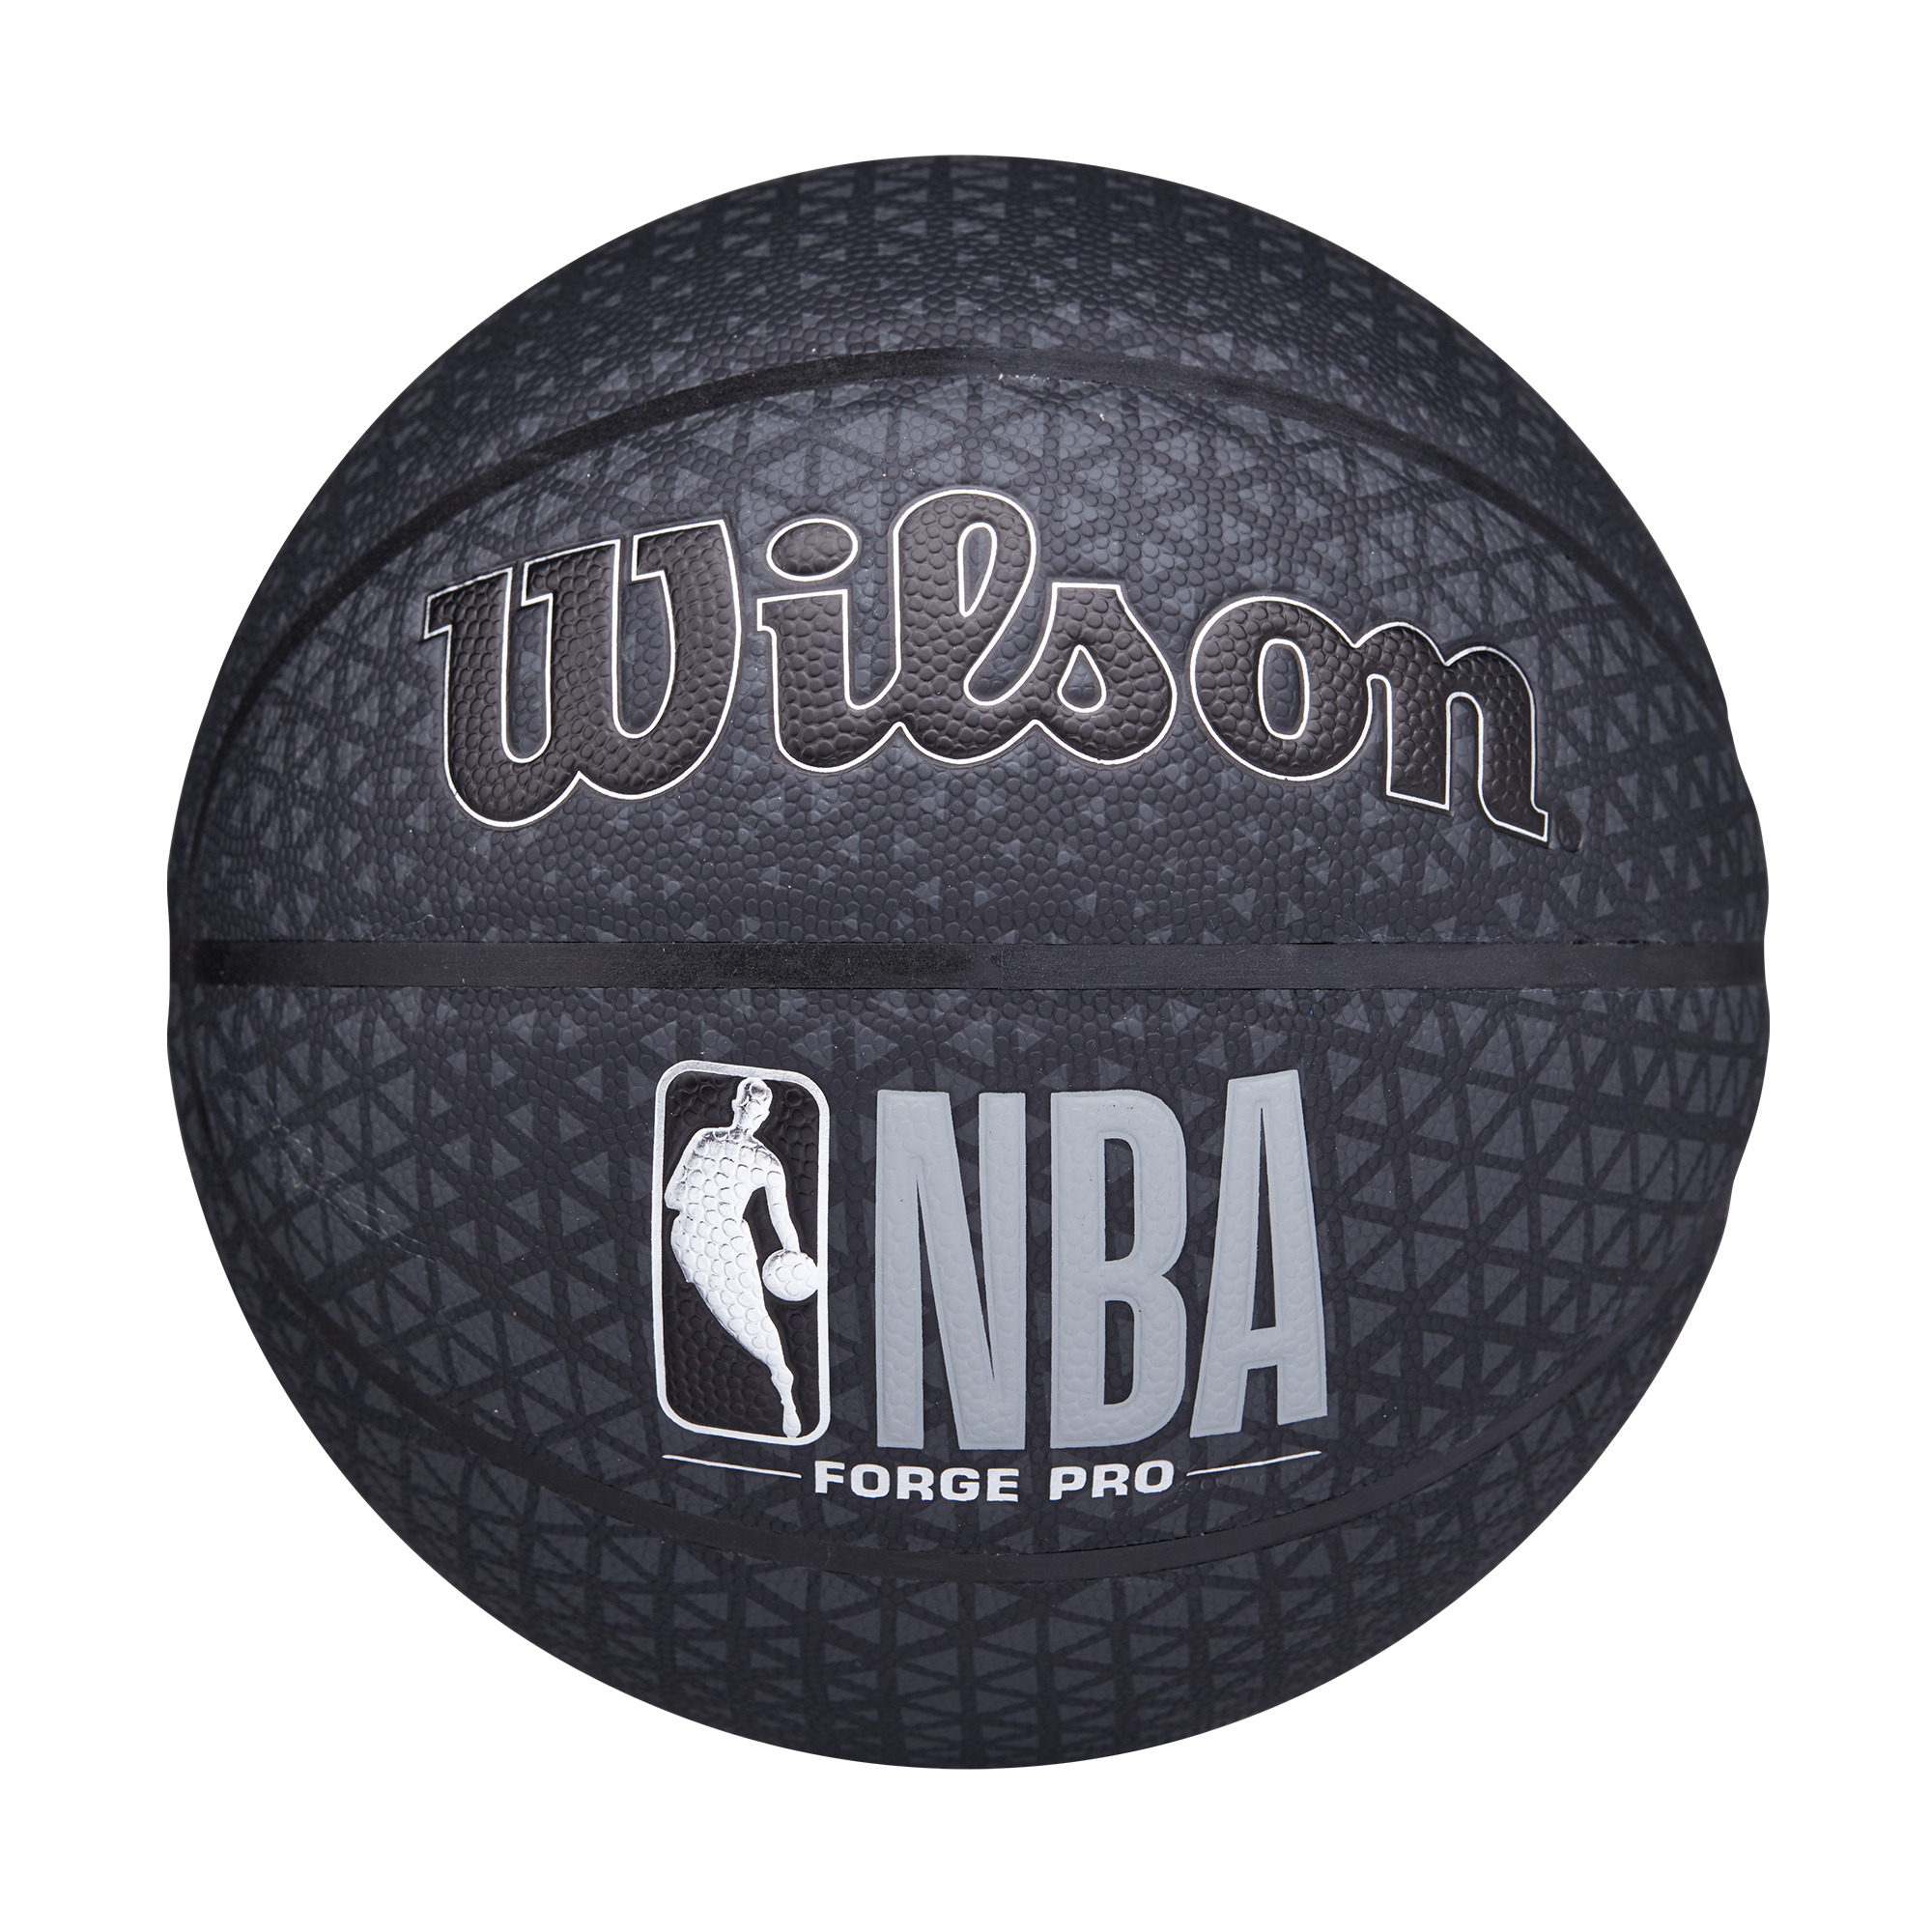 WILSON basketbola bumba NBA FORGE PRO WTB8001XB07 bumba